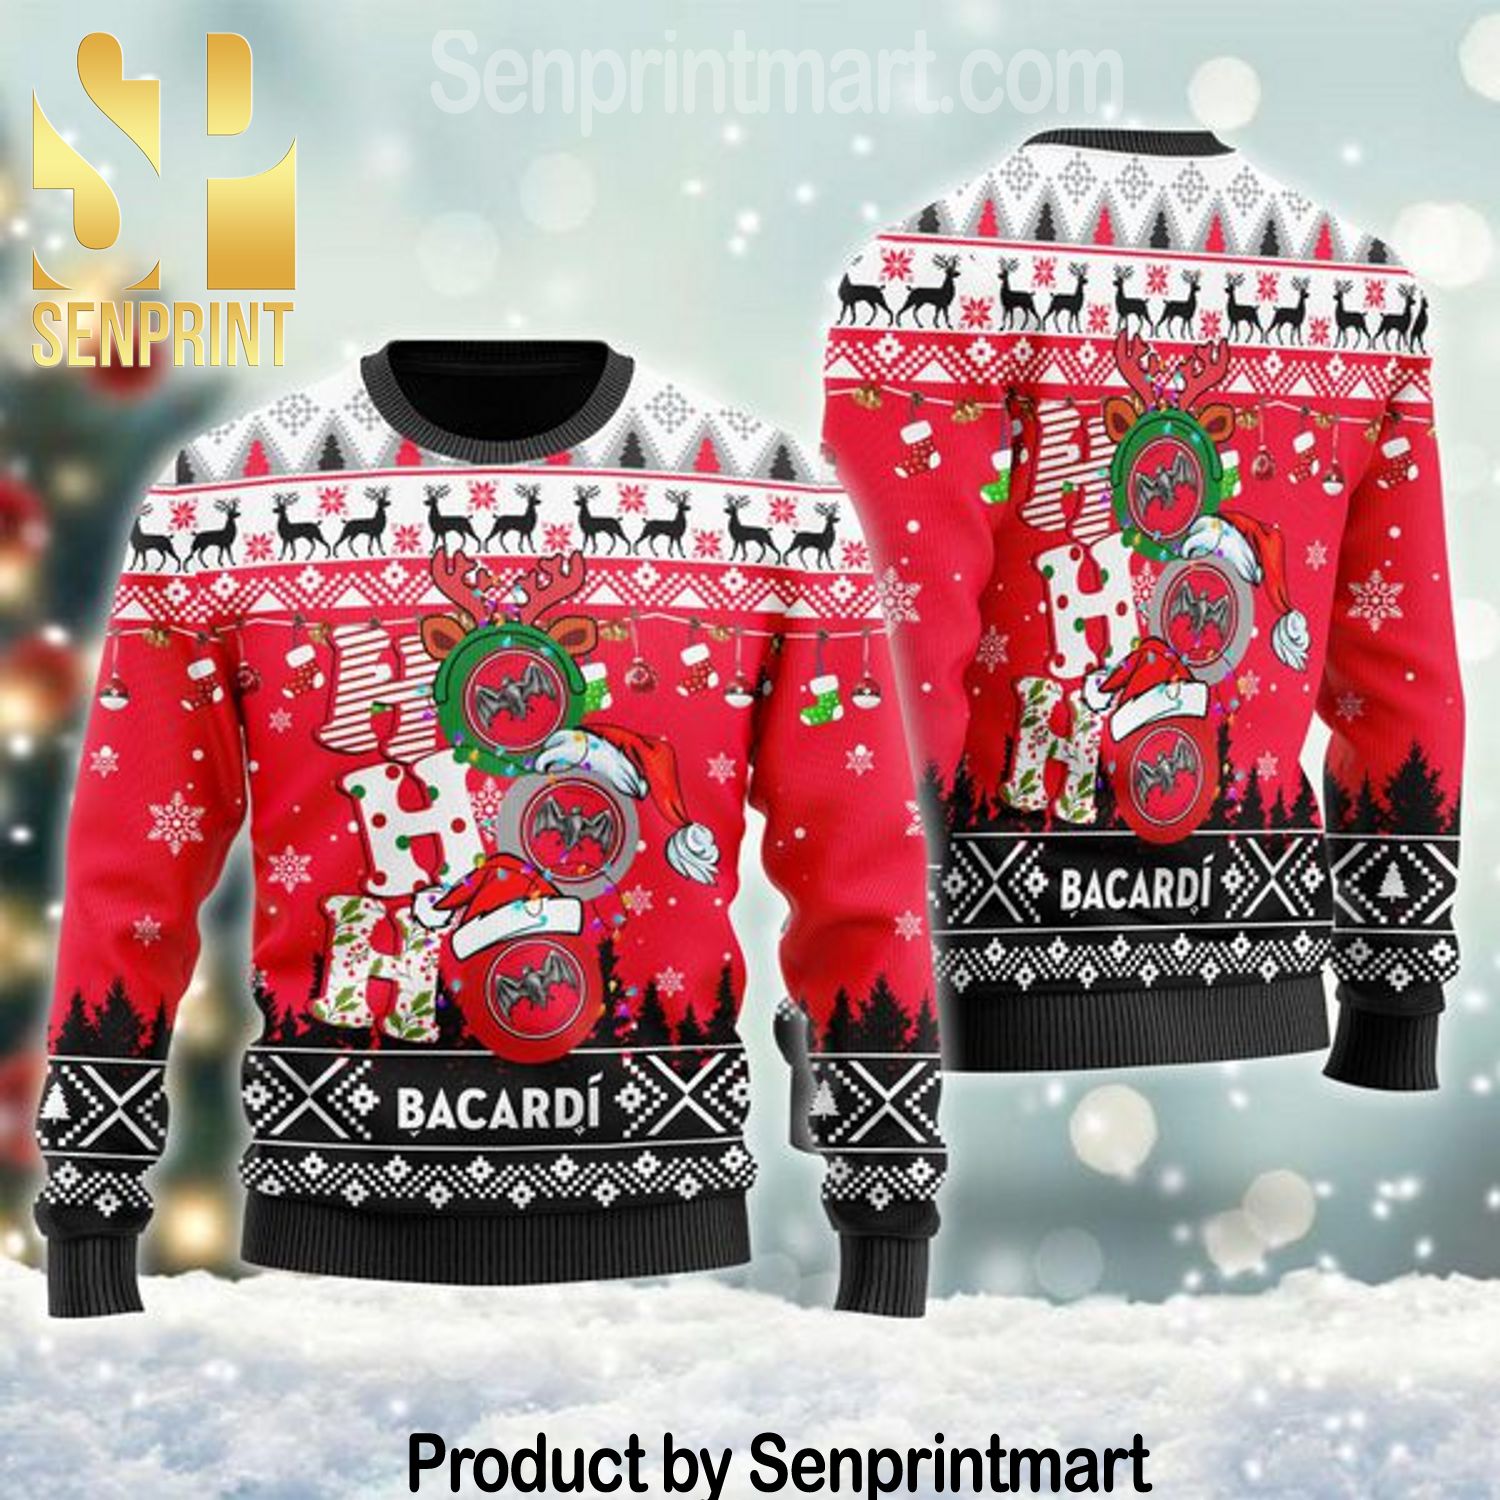 Bacardi Rum Ho Ho Ho Gift Ideas Wool Knitted Pattern Ugly Sweater